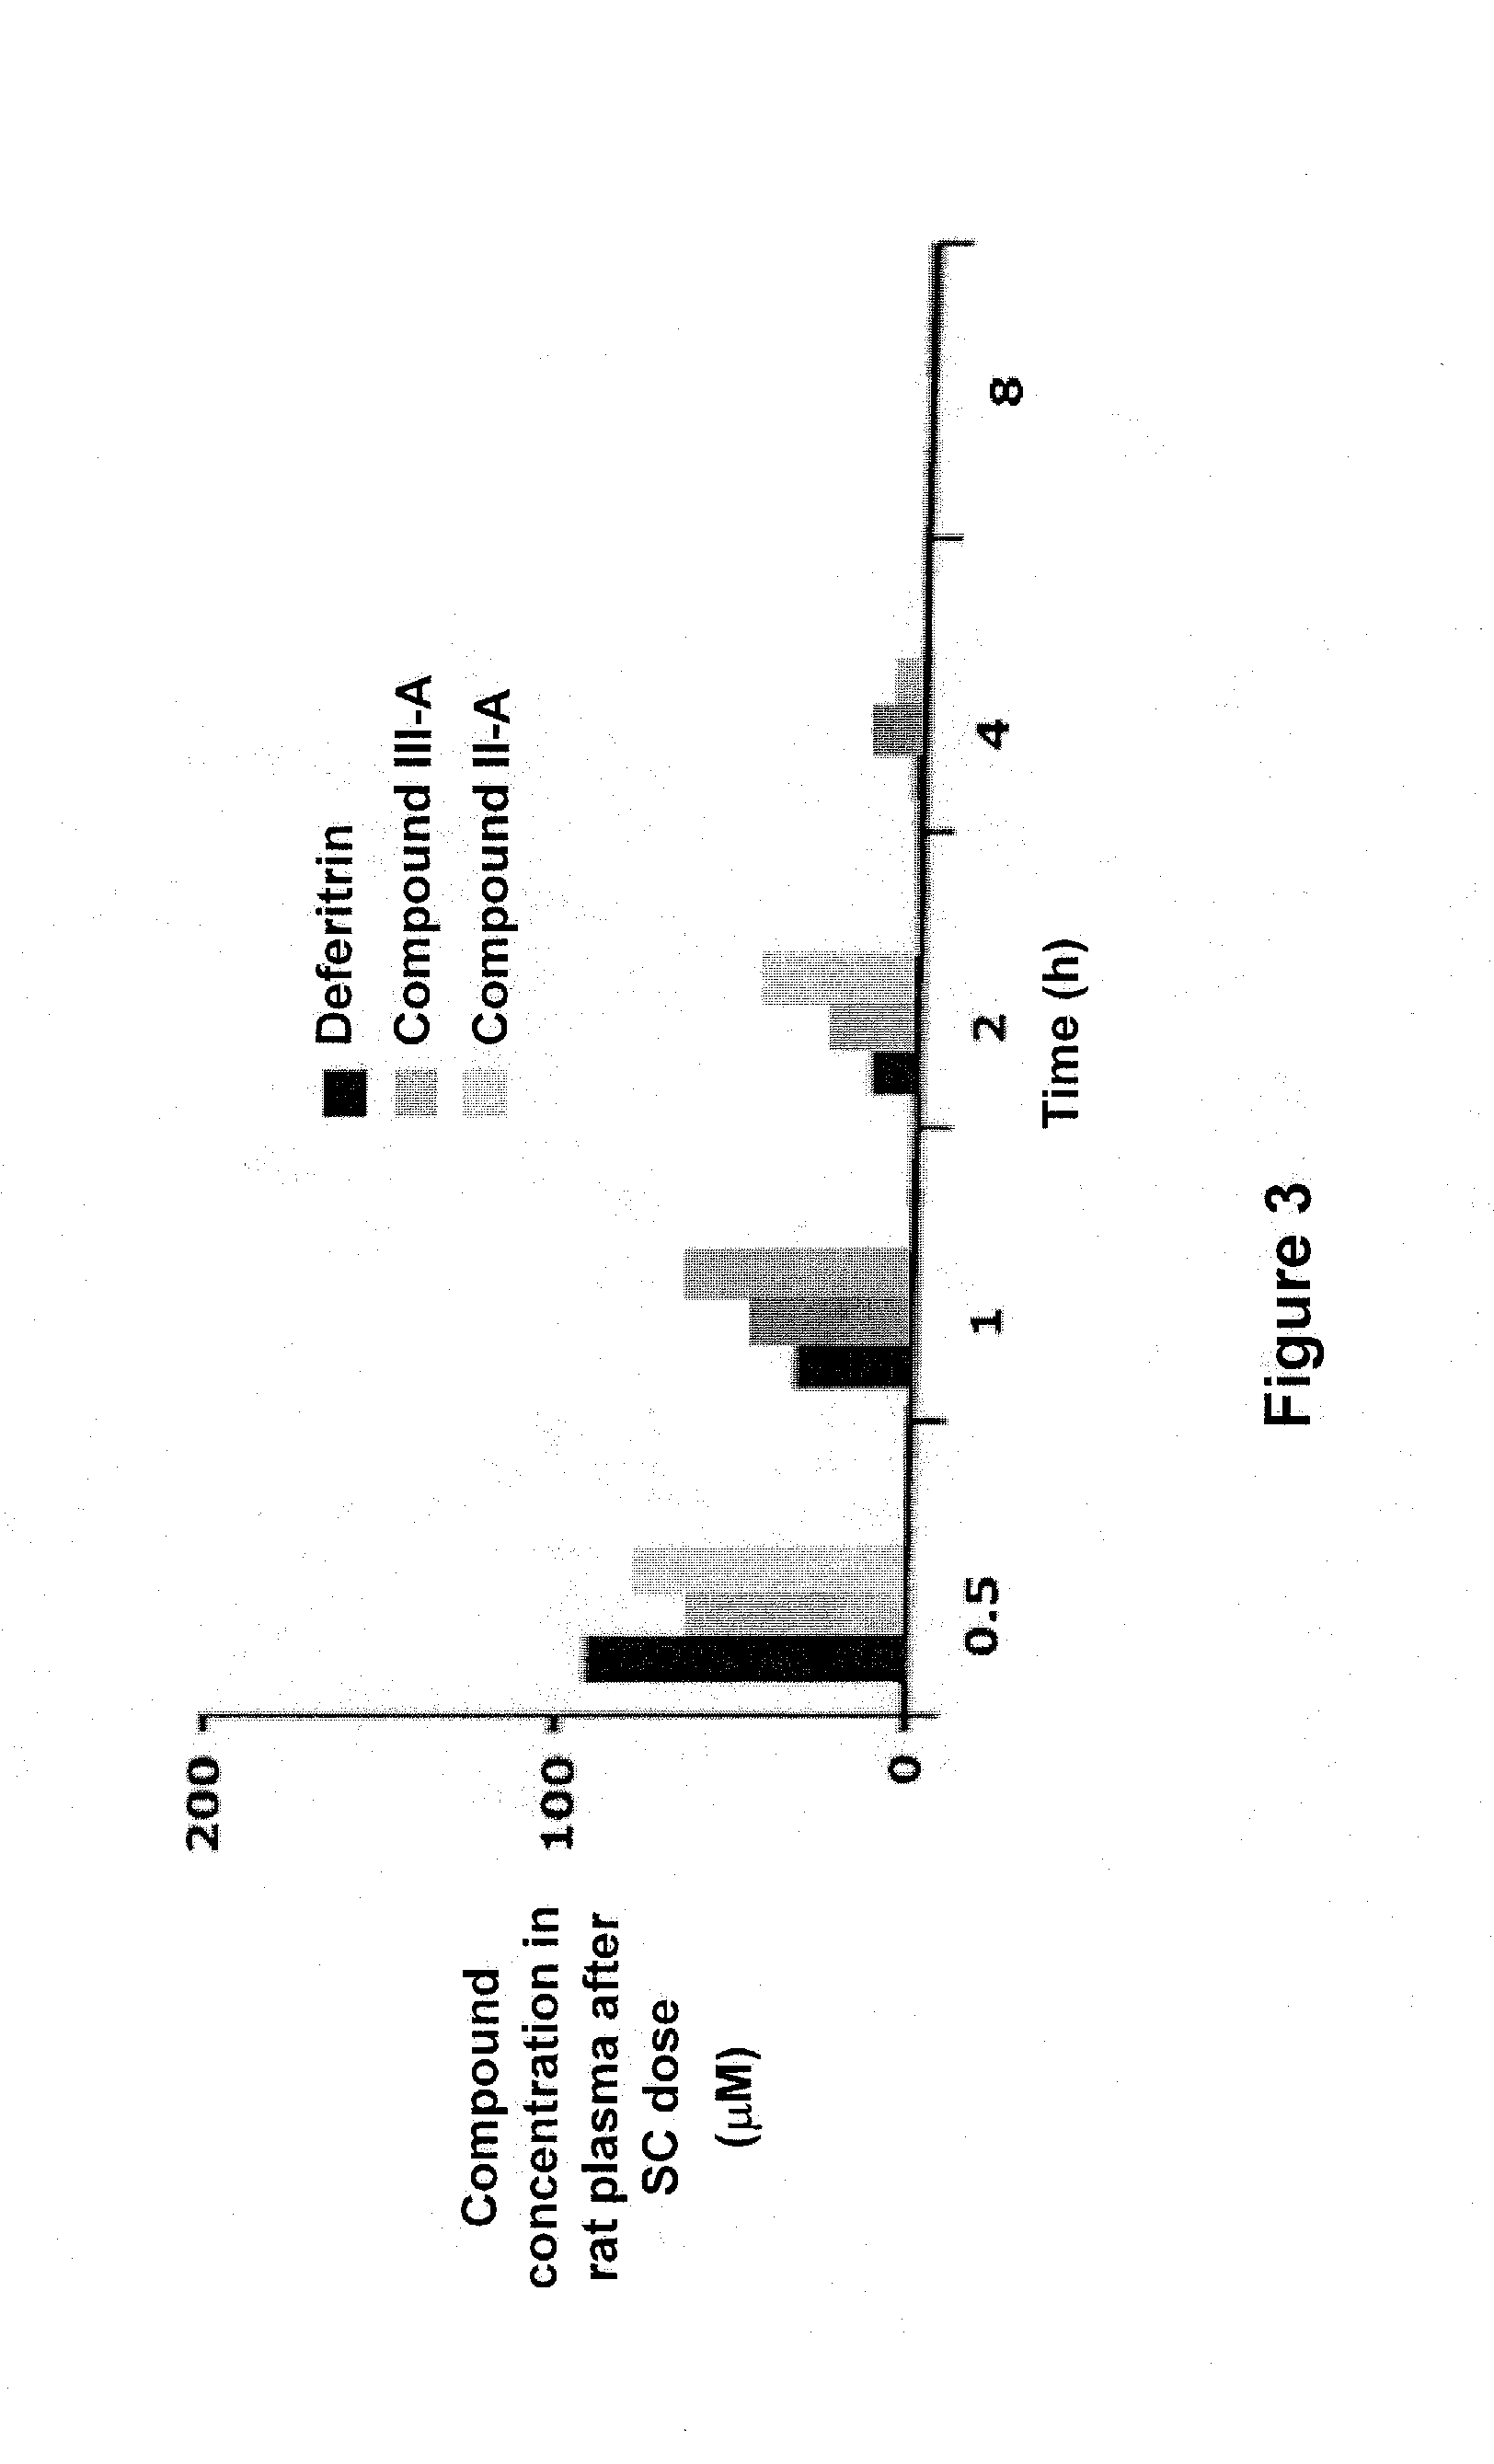 Uses of 3'-desferrithiocin analogs